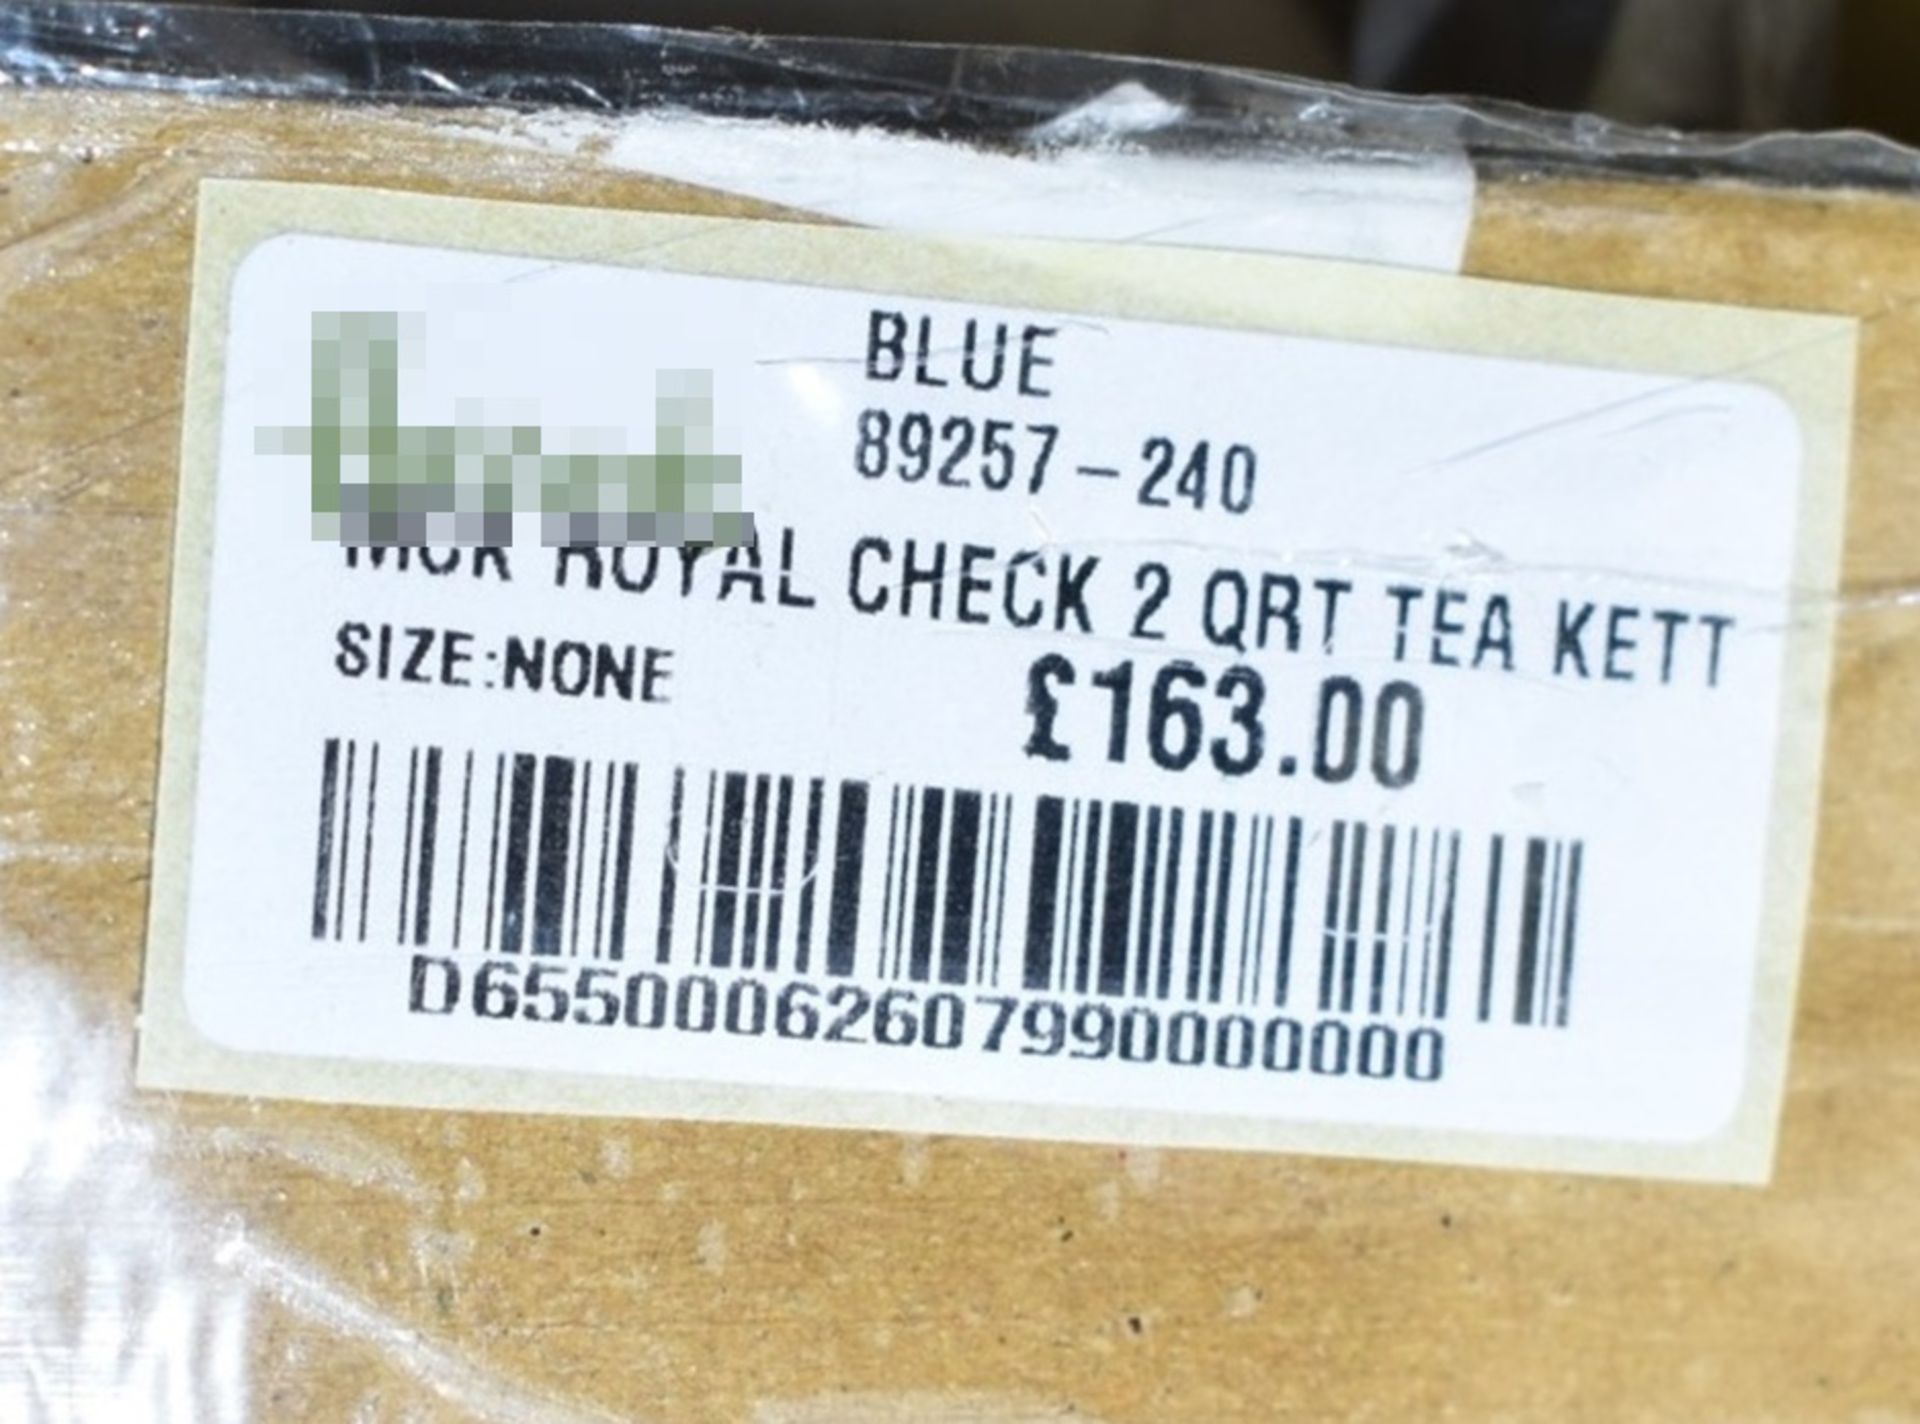 1 x MACKENZIE-CHILDS Royal Check 2-Quart Tea Kettle - Original Price £163.00 - Unused Boxed Stock - Image 4 of 11